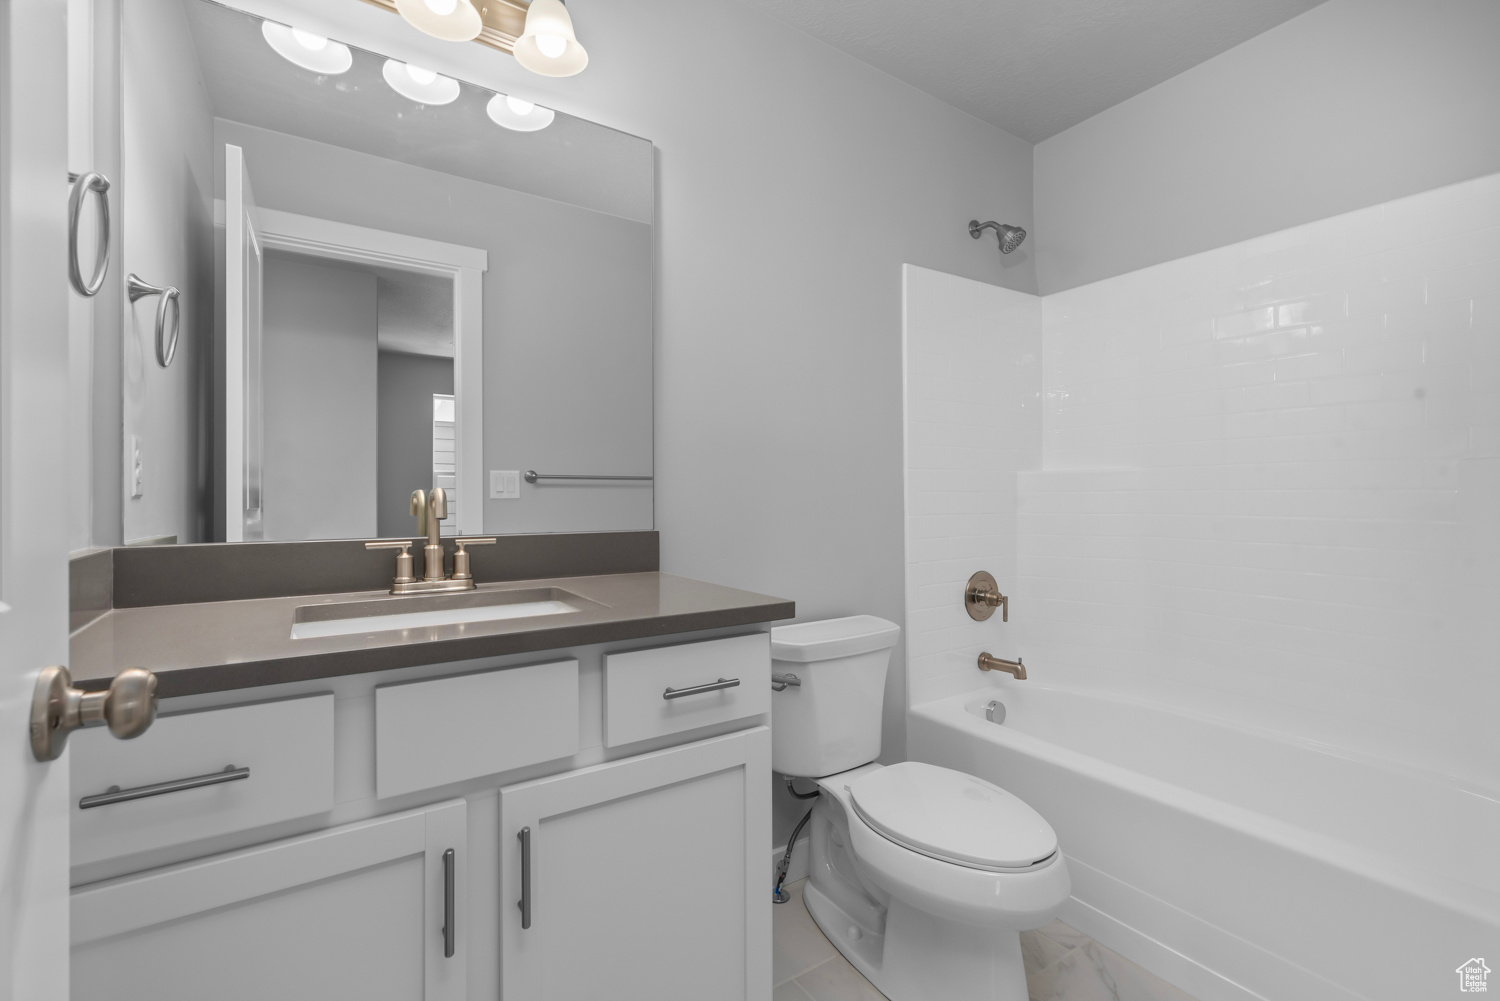 Full bathroom featuring tile floors, shower / washtub combination, toilet, and large vanity